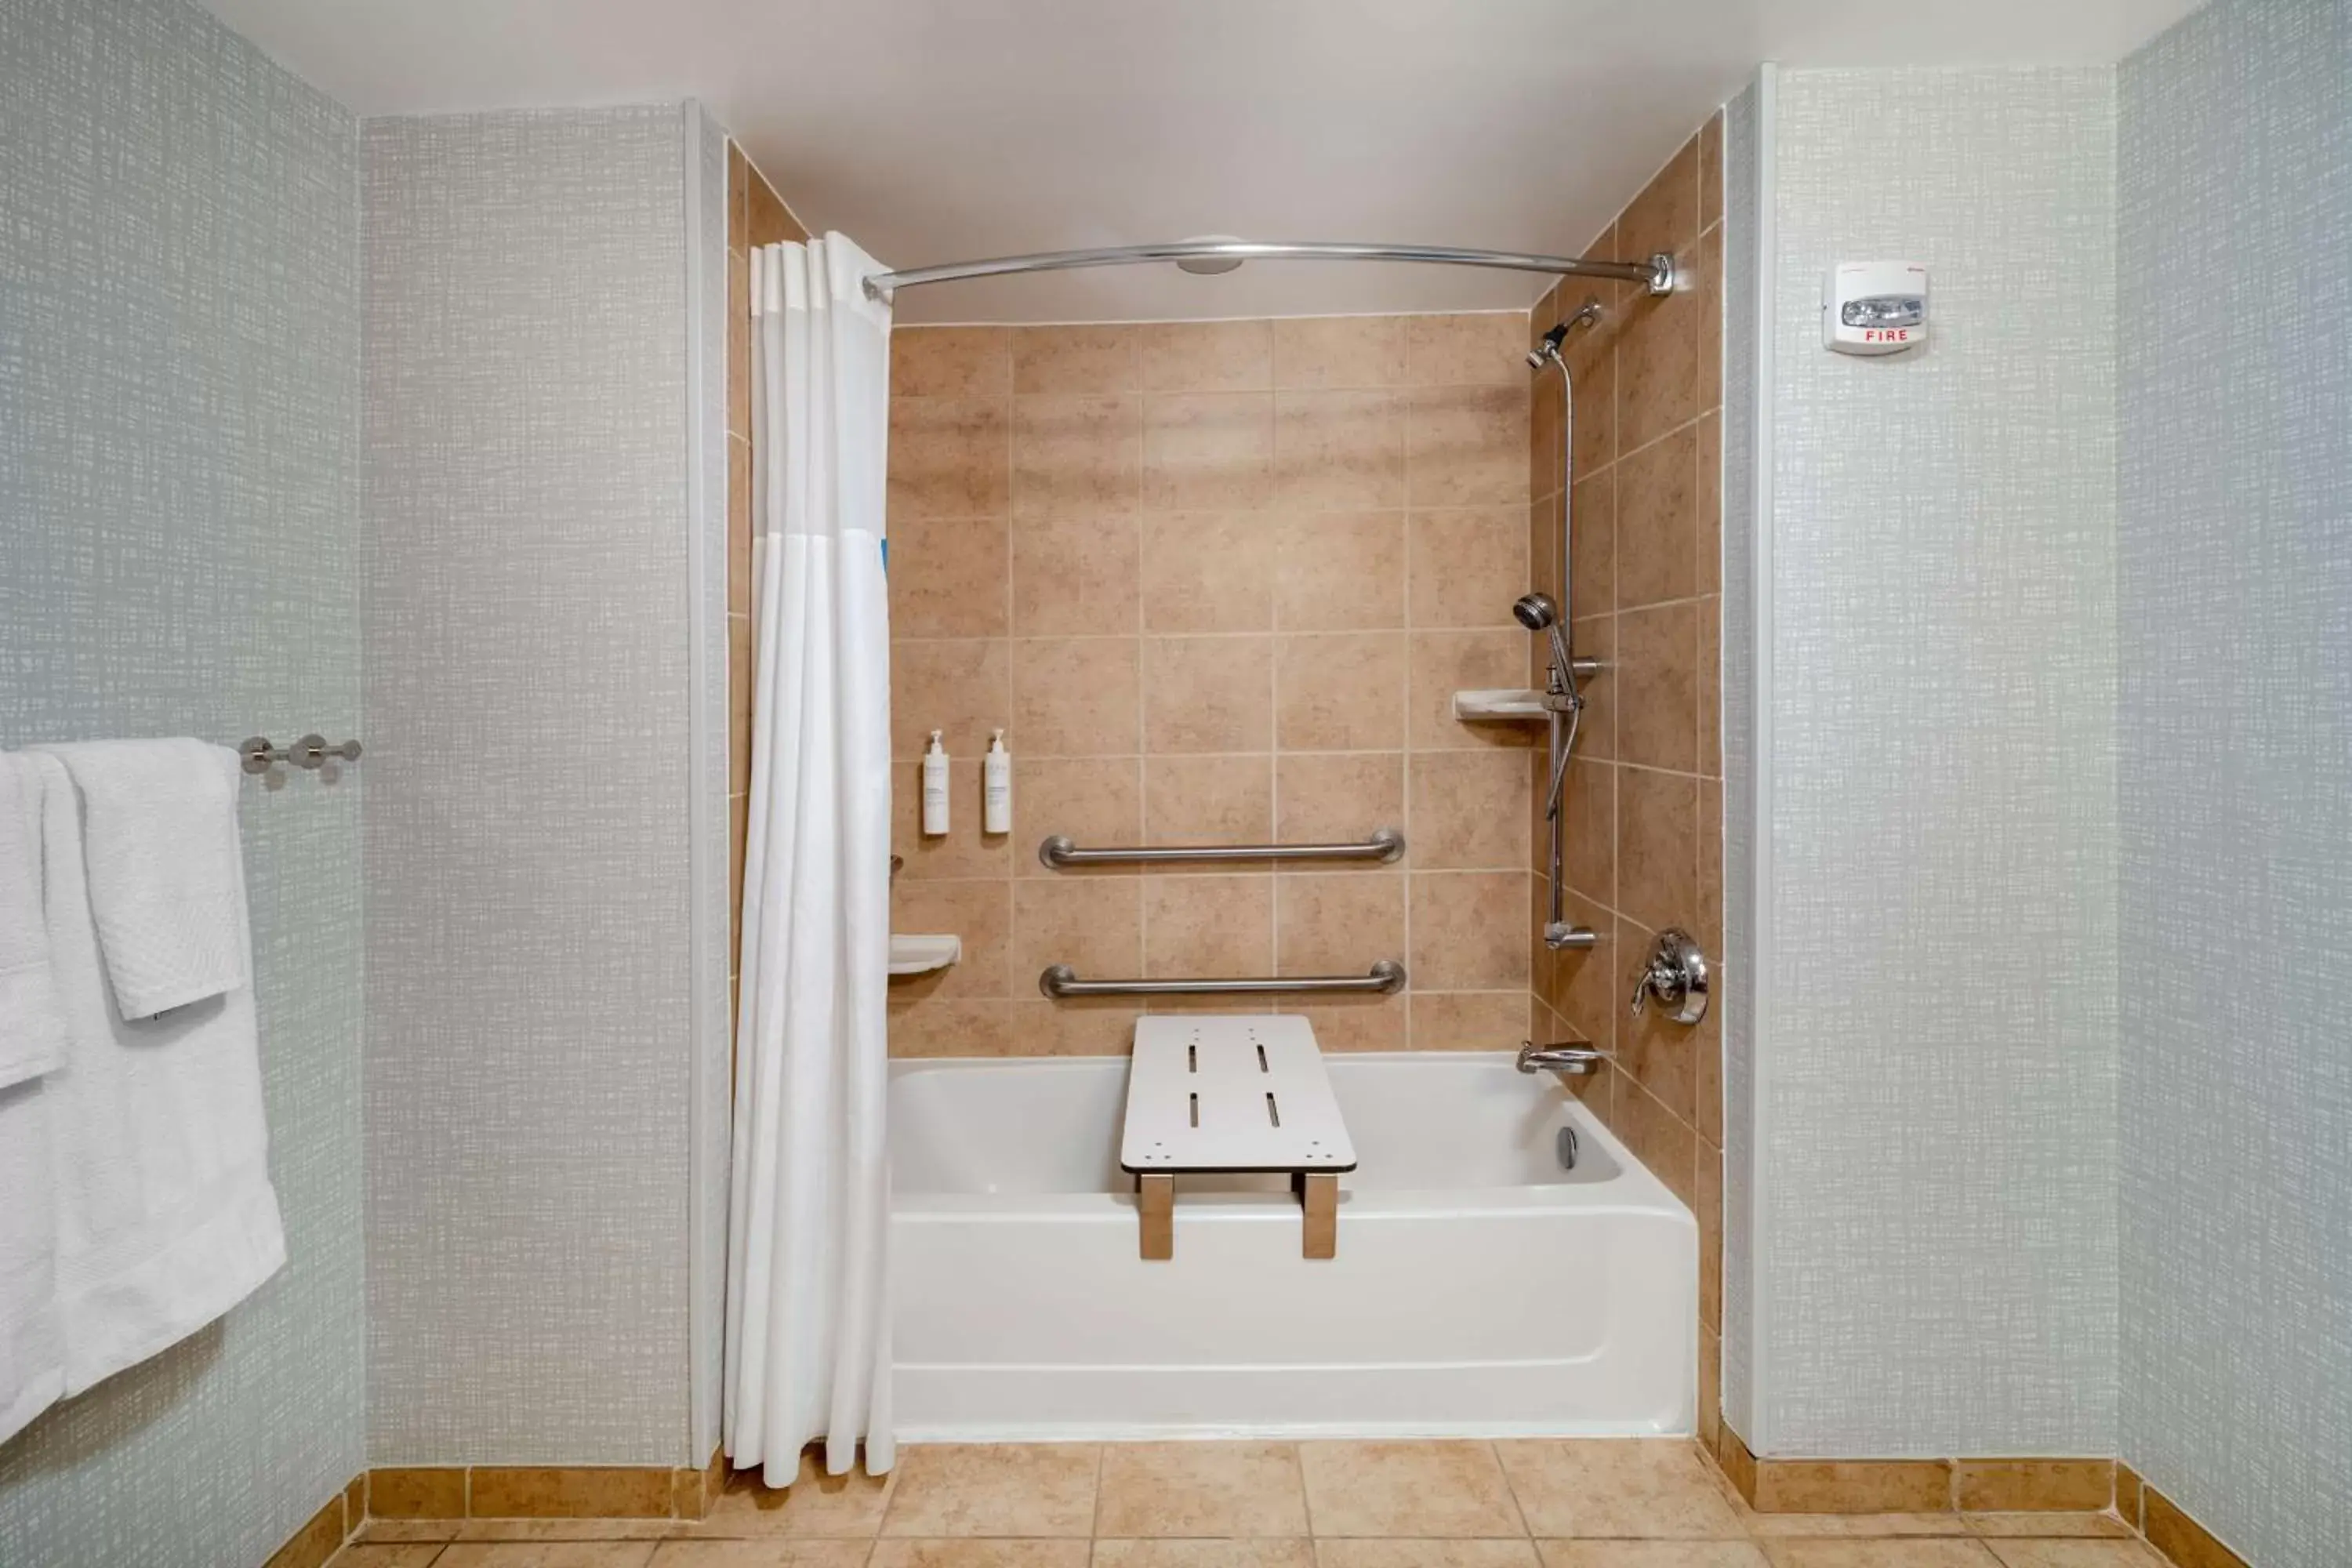 Bathroom in Hampton Inn & Suites Salida, CO